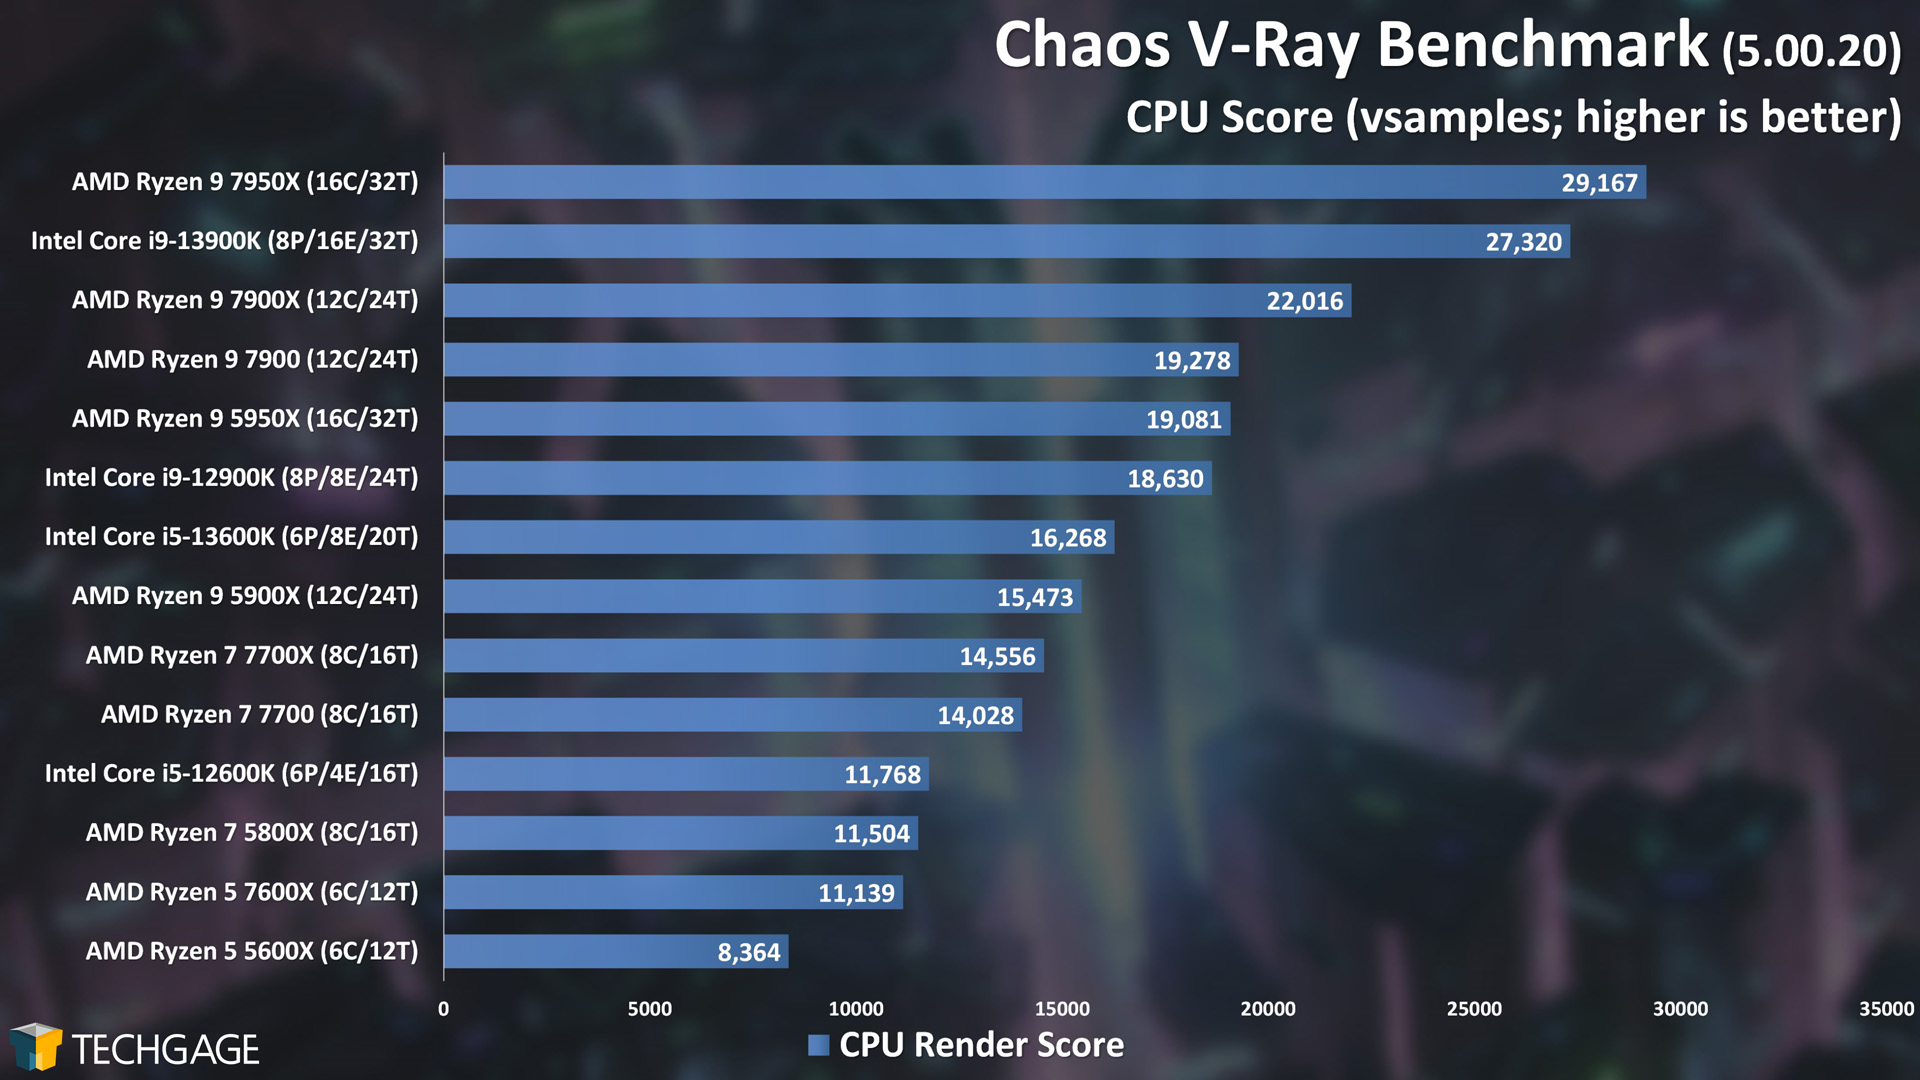 Chaos V-Ray Benchmark - CPU Rendering Score